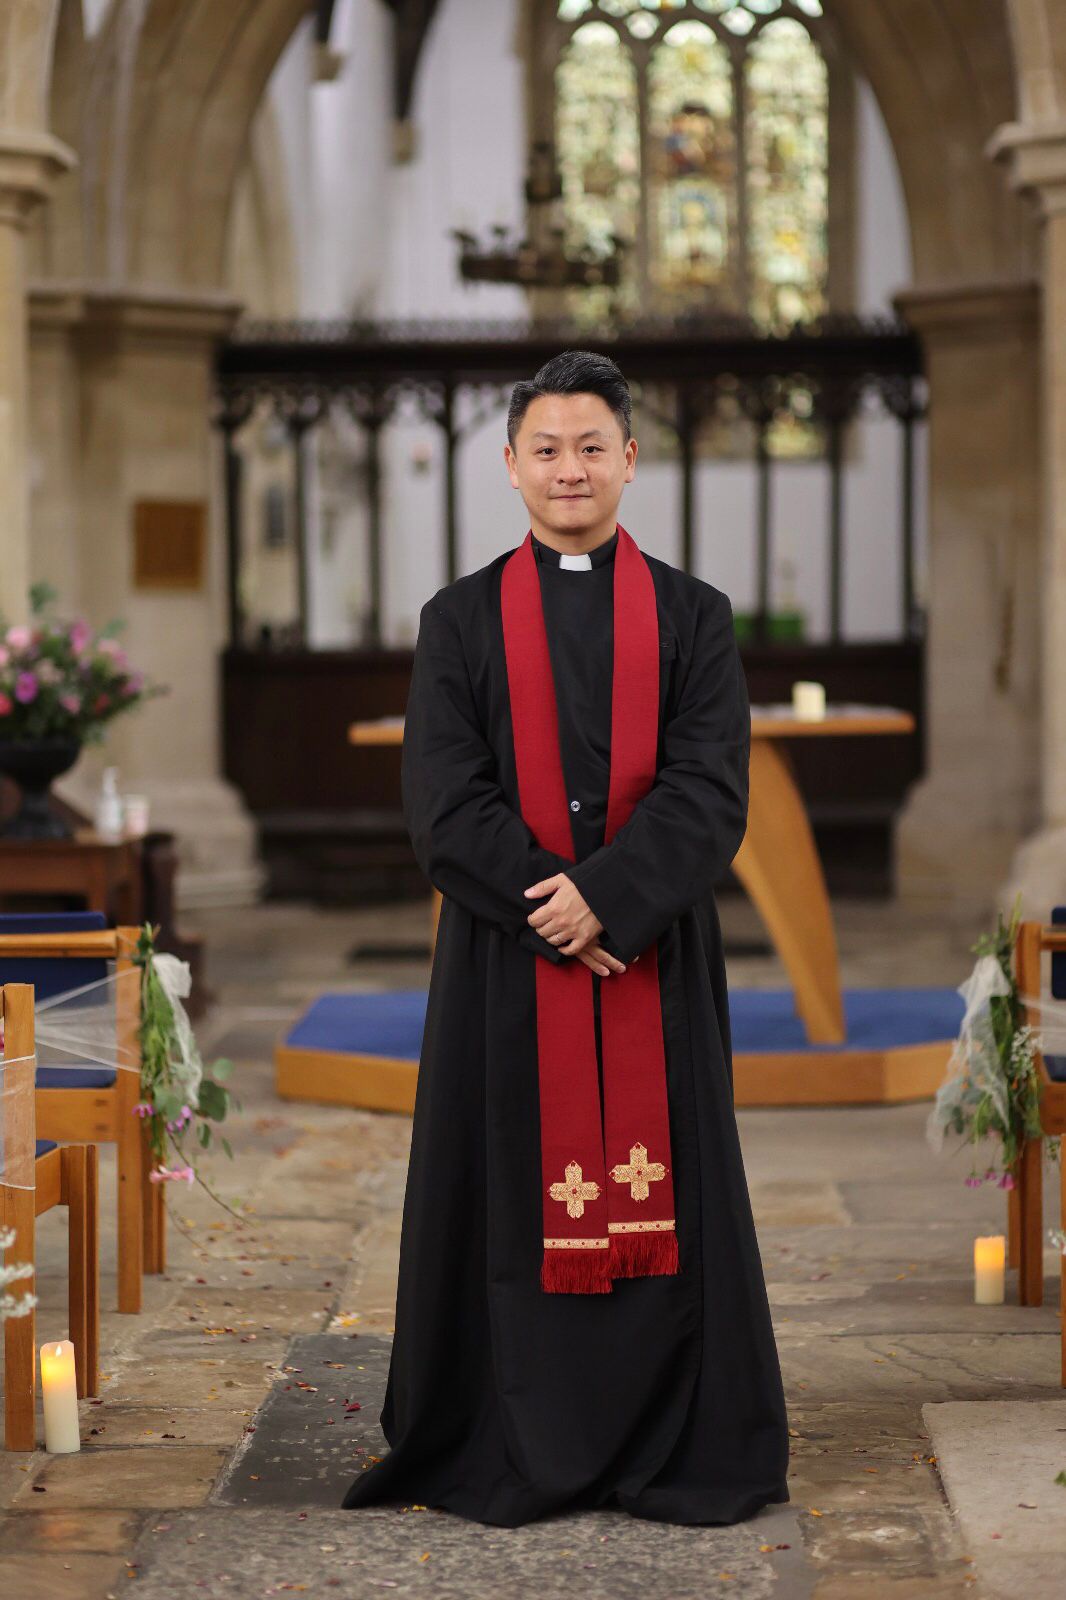 Pastor Zhuang Yangming